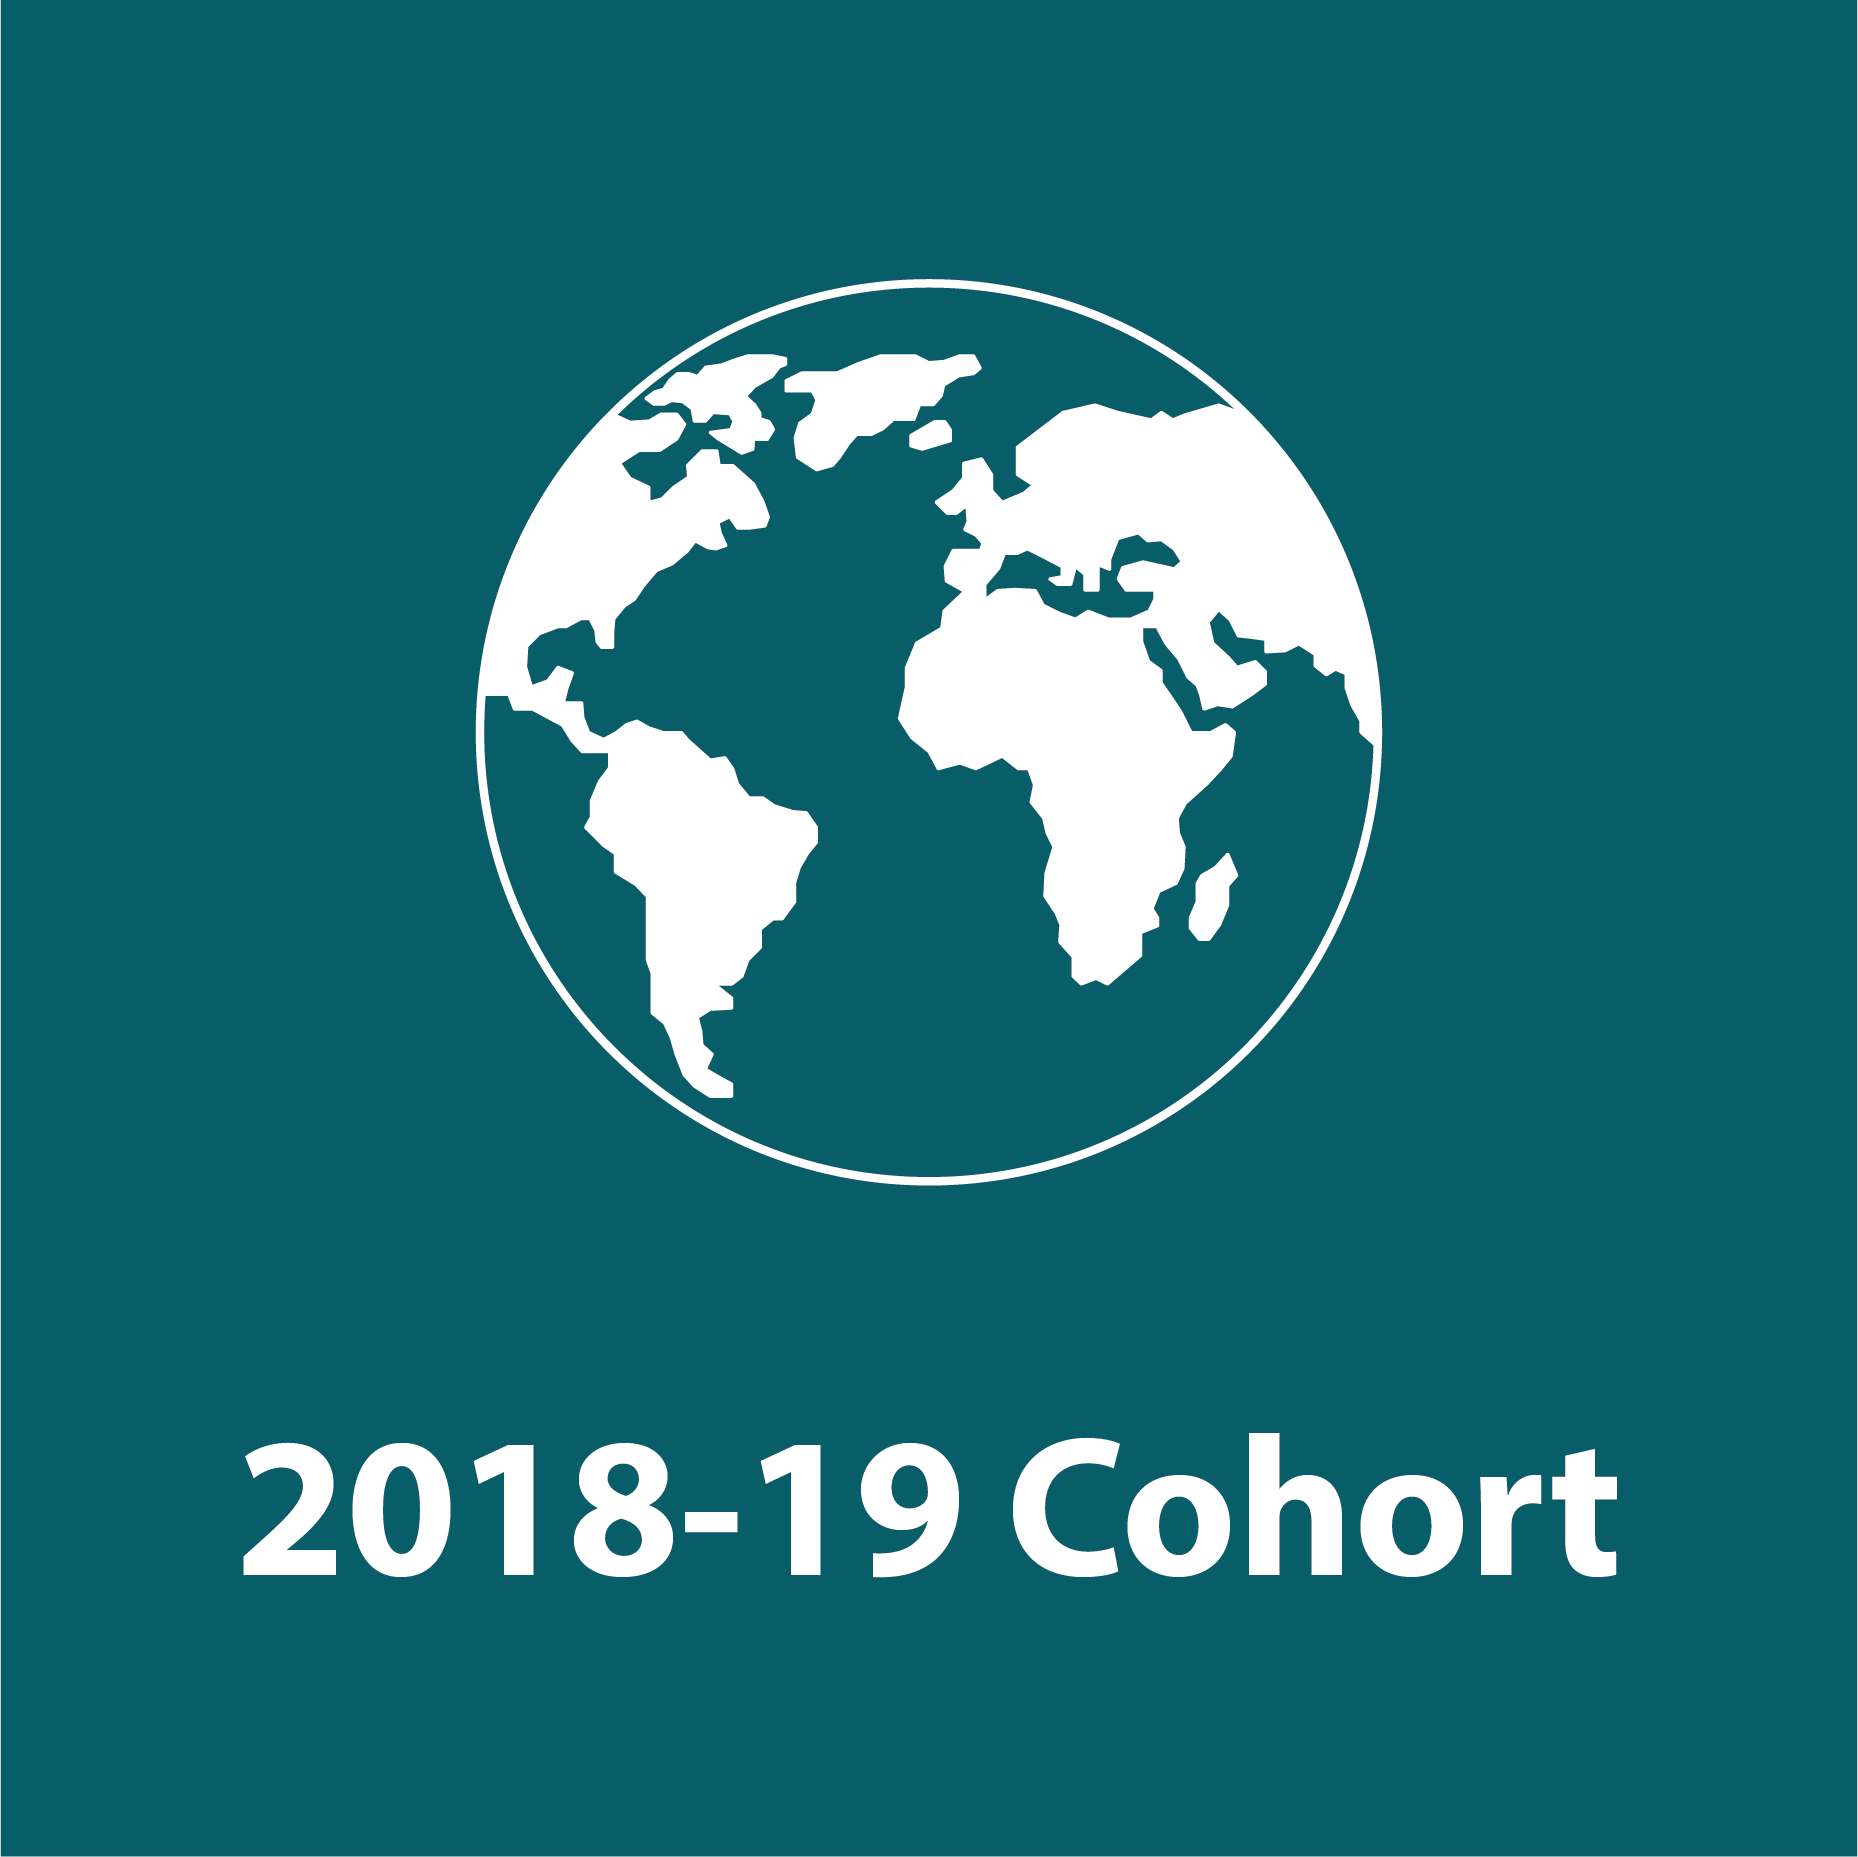 Borysiewicz Fellows 2018 Cohort